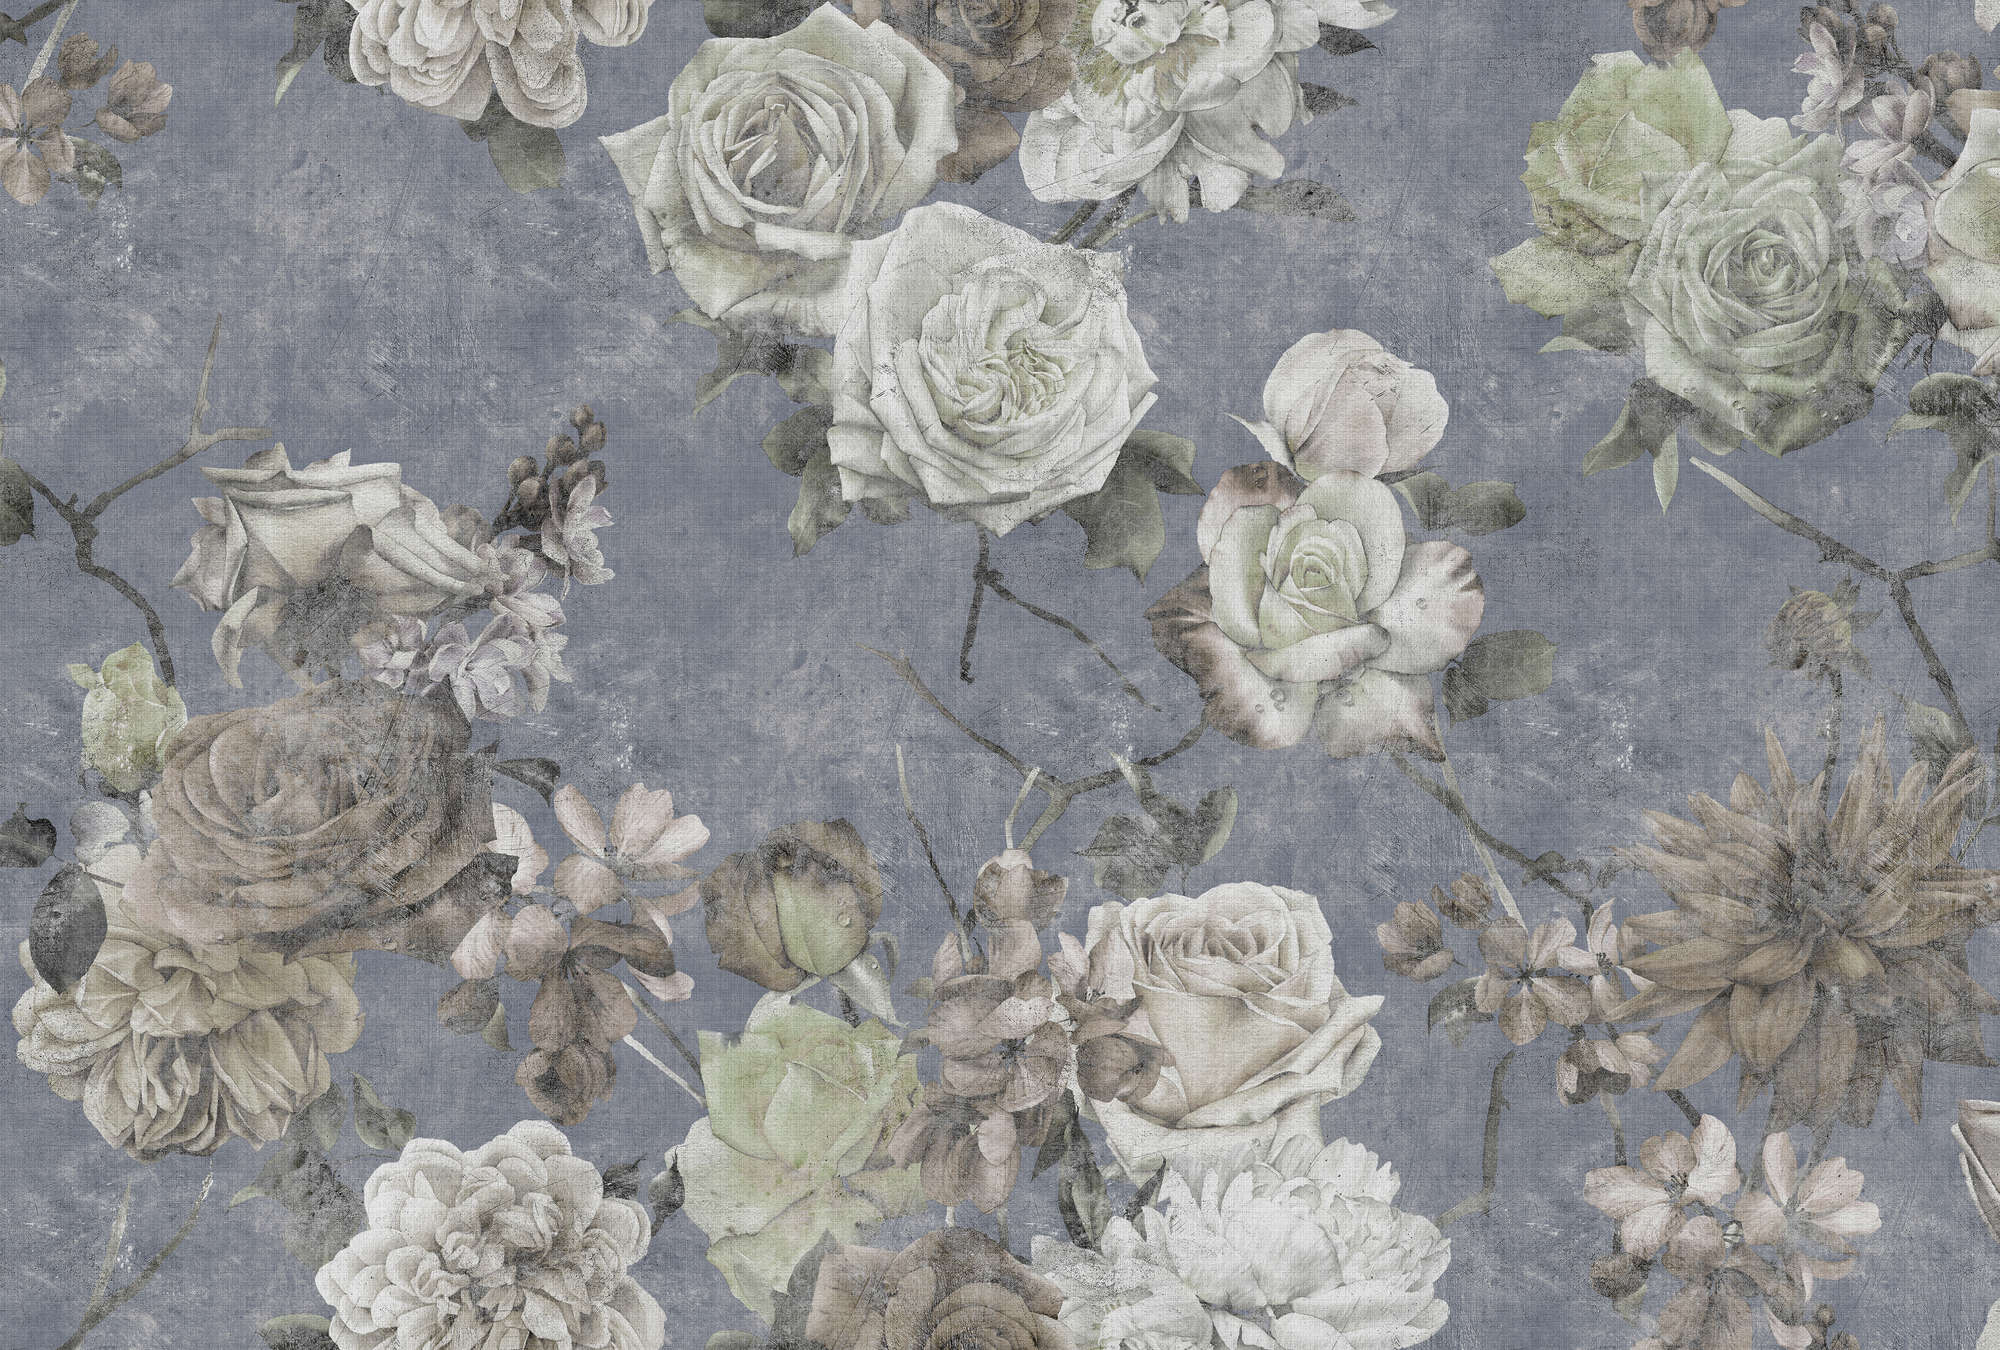             Sleeping Beauty 3 - Vintage Used Look Rose Wallpaper - Nature Linen Texture - Blue, White | Matt Smooth Non-woven
        